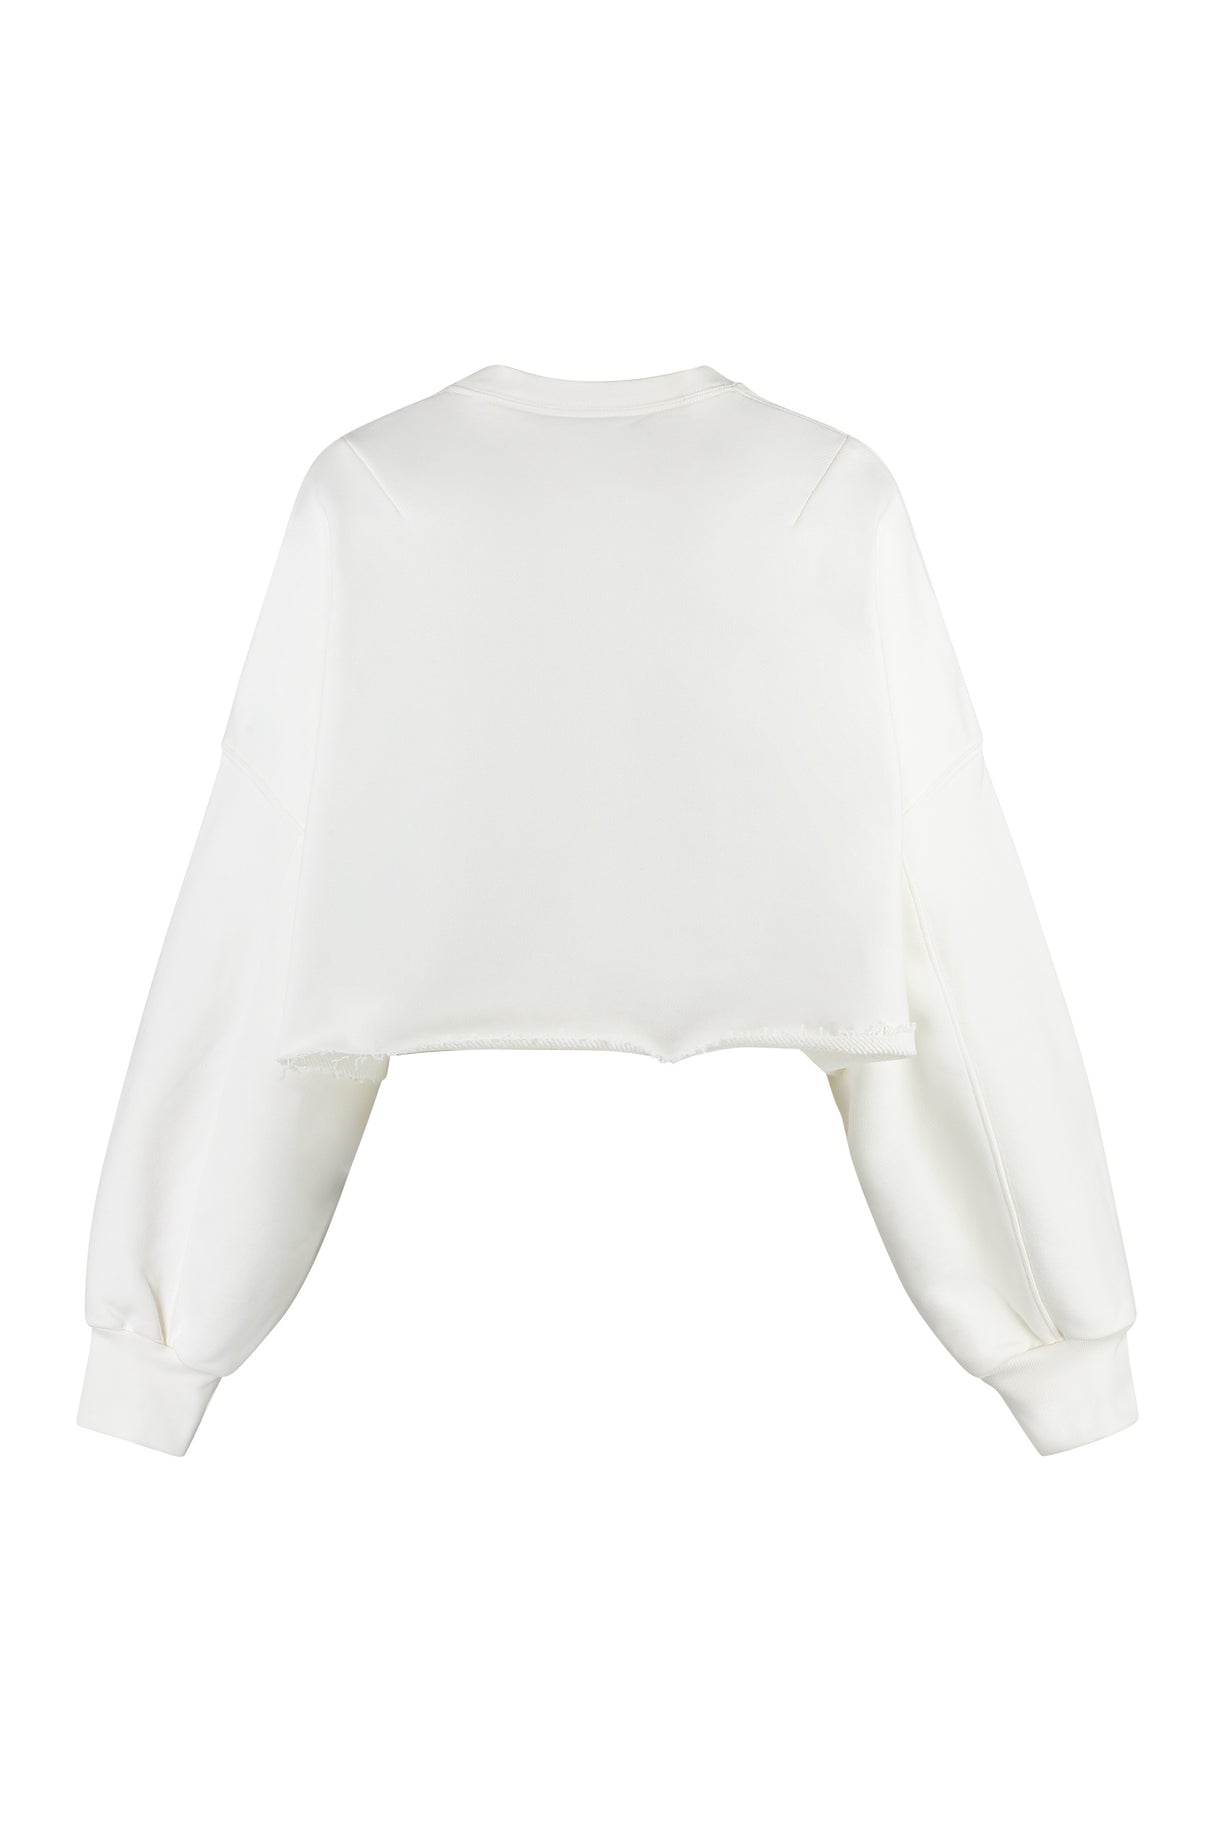 AMIRI Floral Print Cotton Sweatshirt for Women